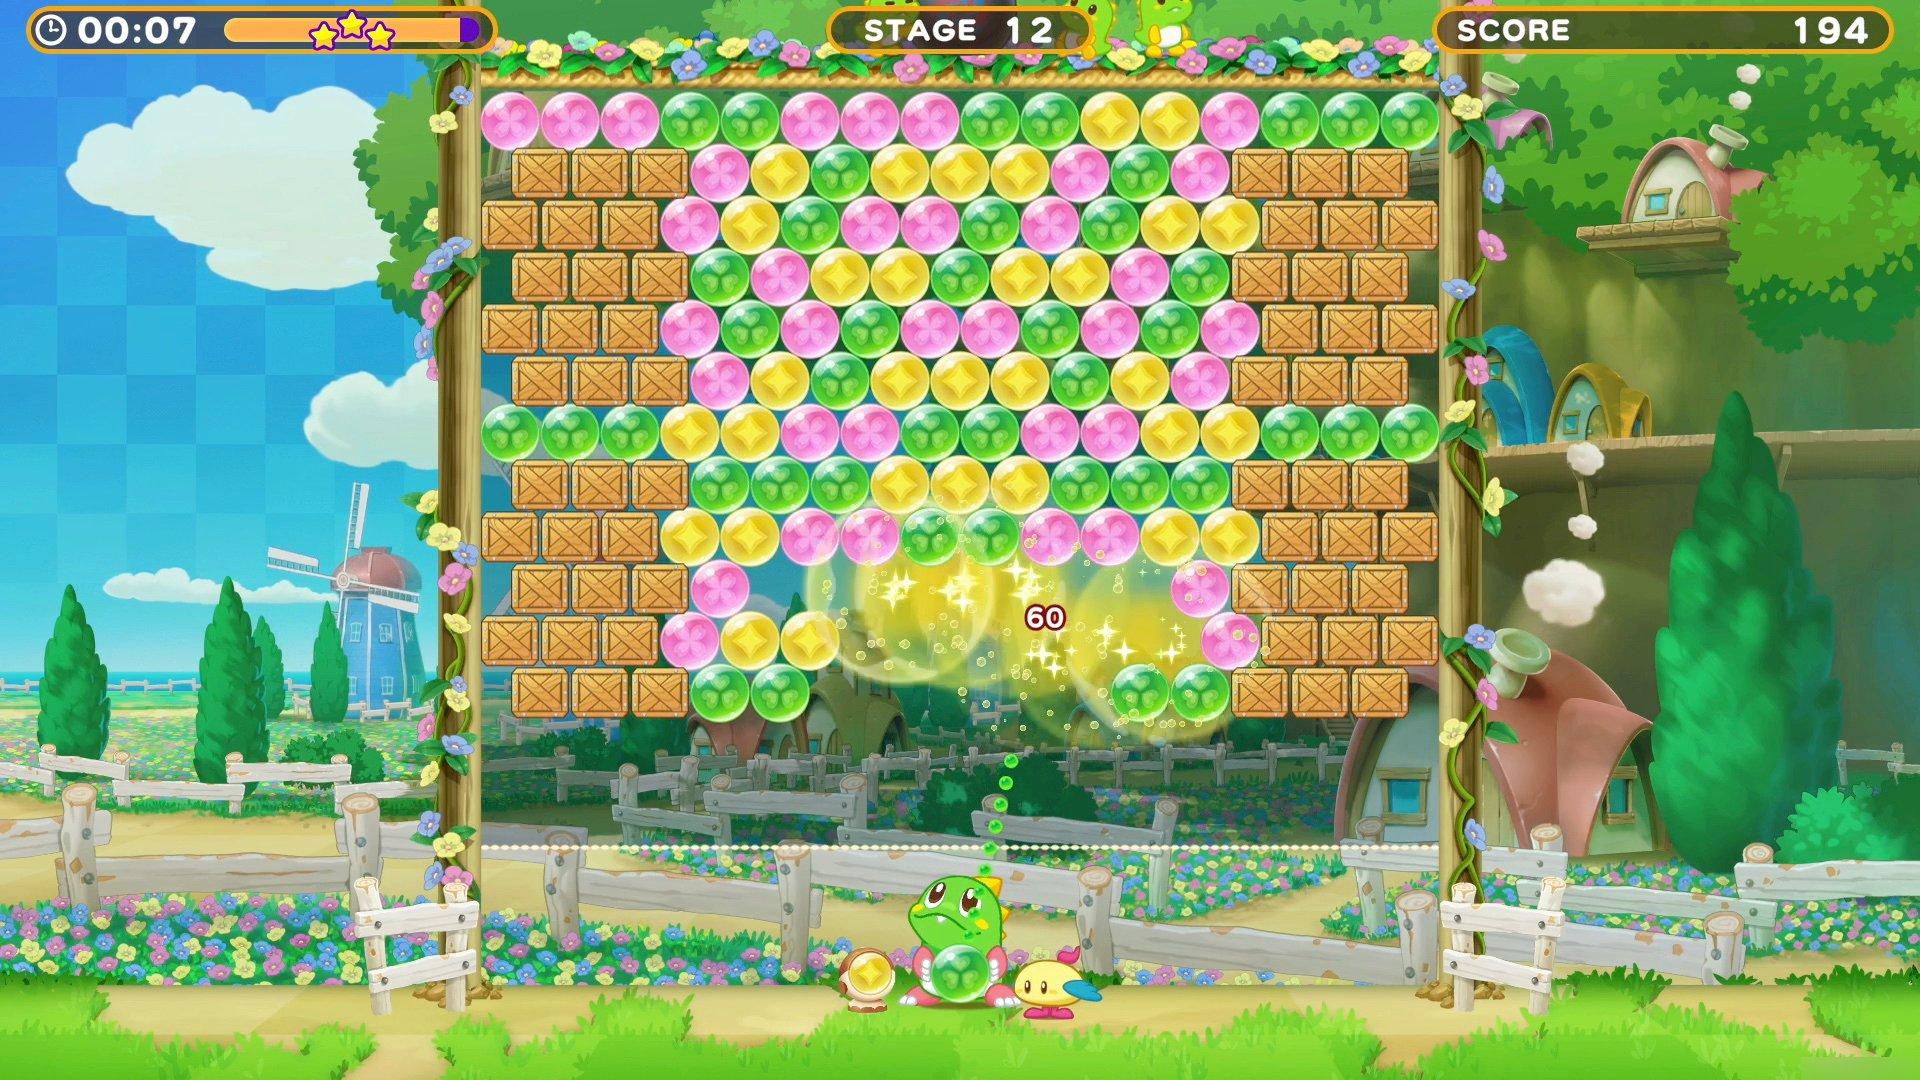 Puzzle Bobble Everybubble! - Nintendo Switch - Compra jogos online